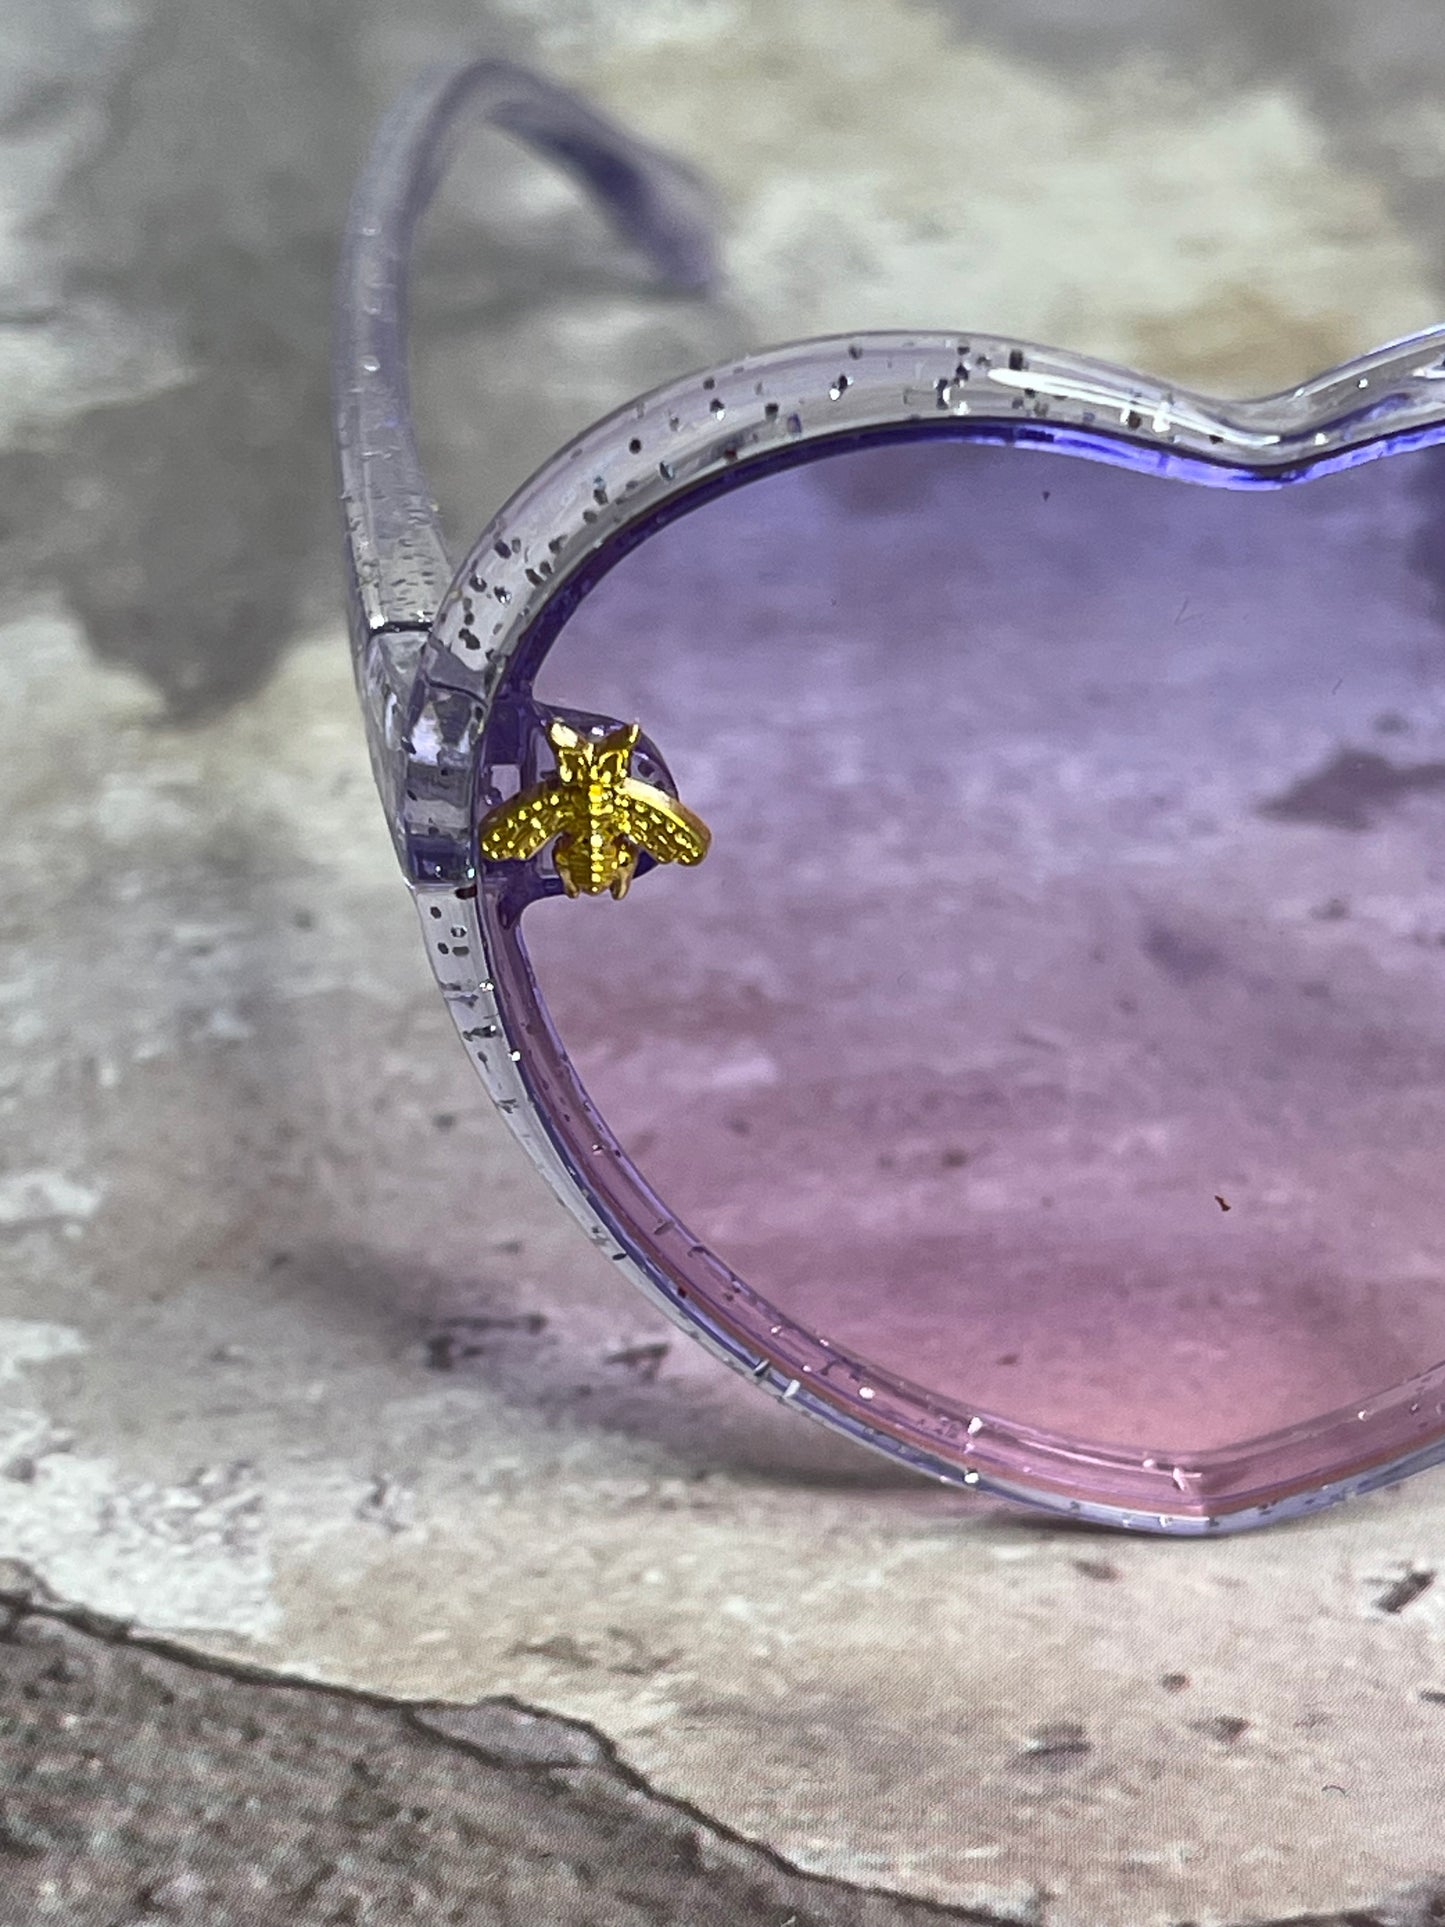 Purple Glitter Gradient Polarized Heart Shaped Sunglasses